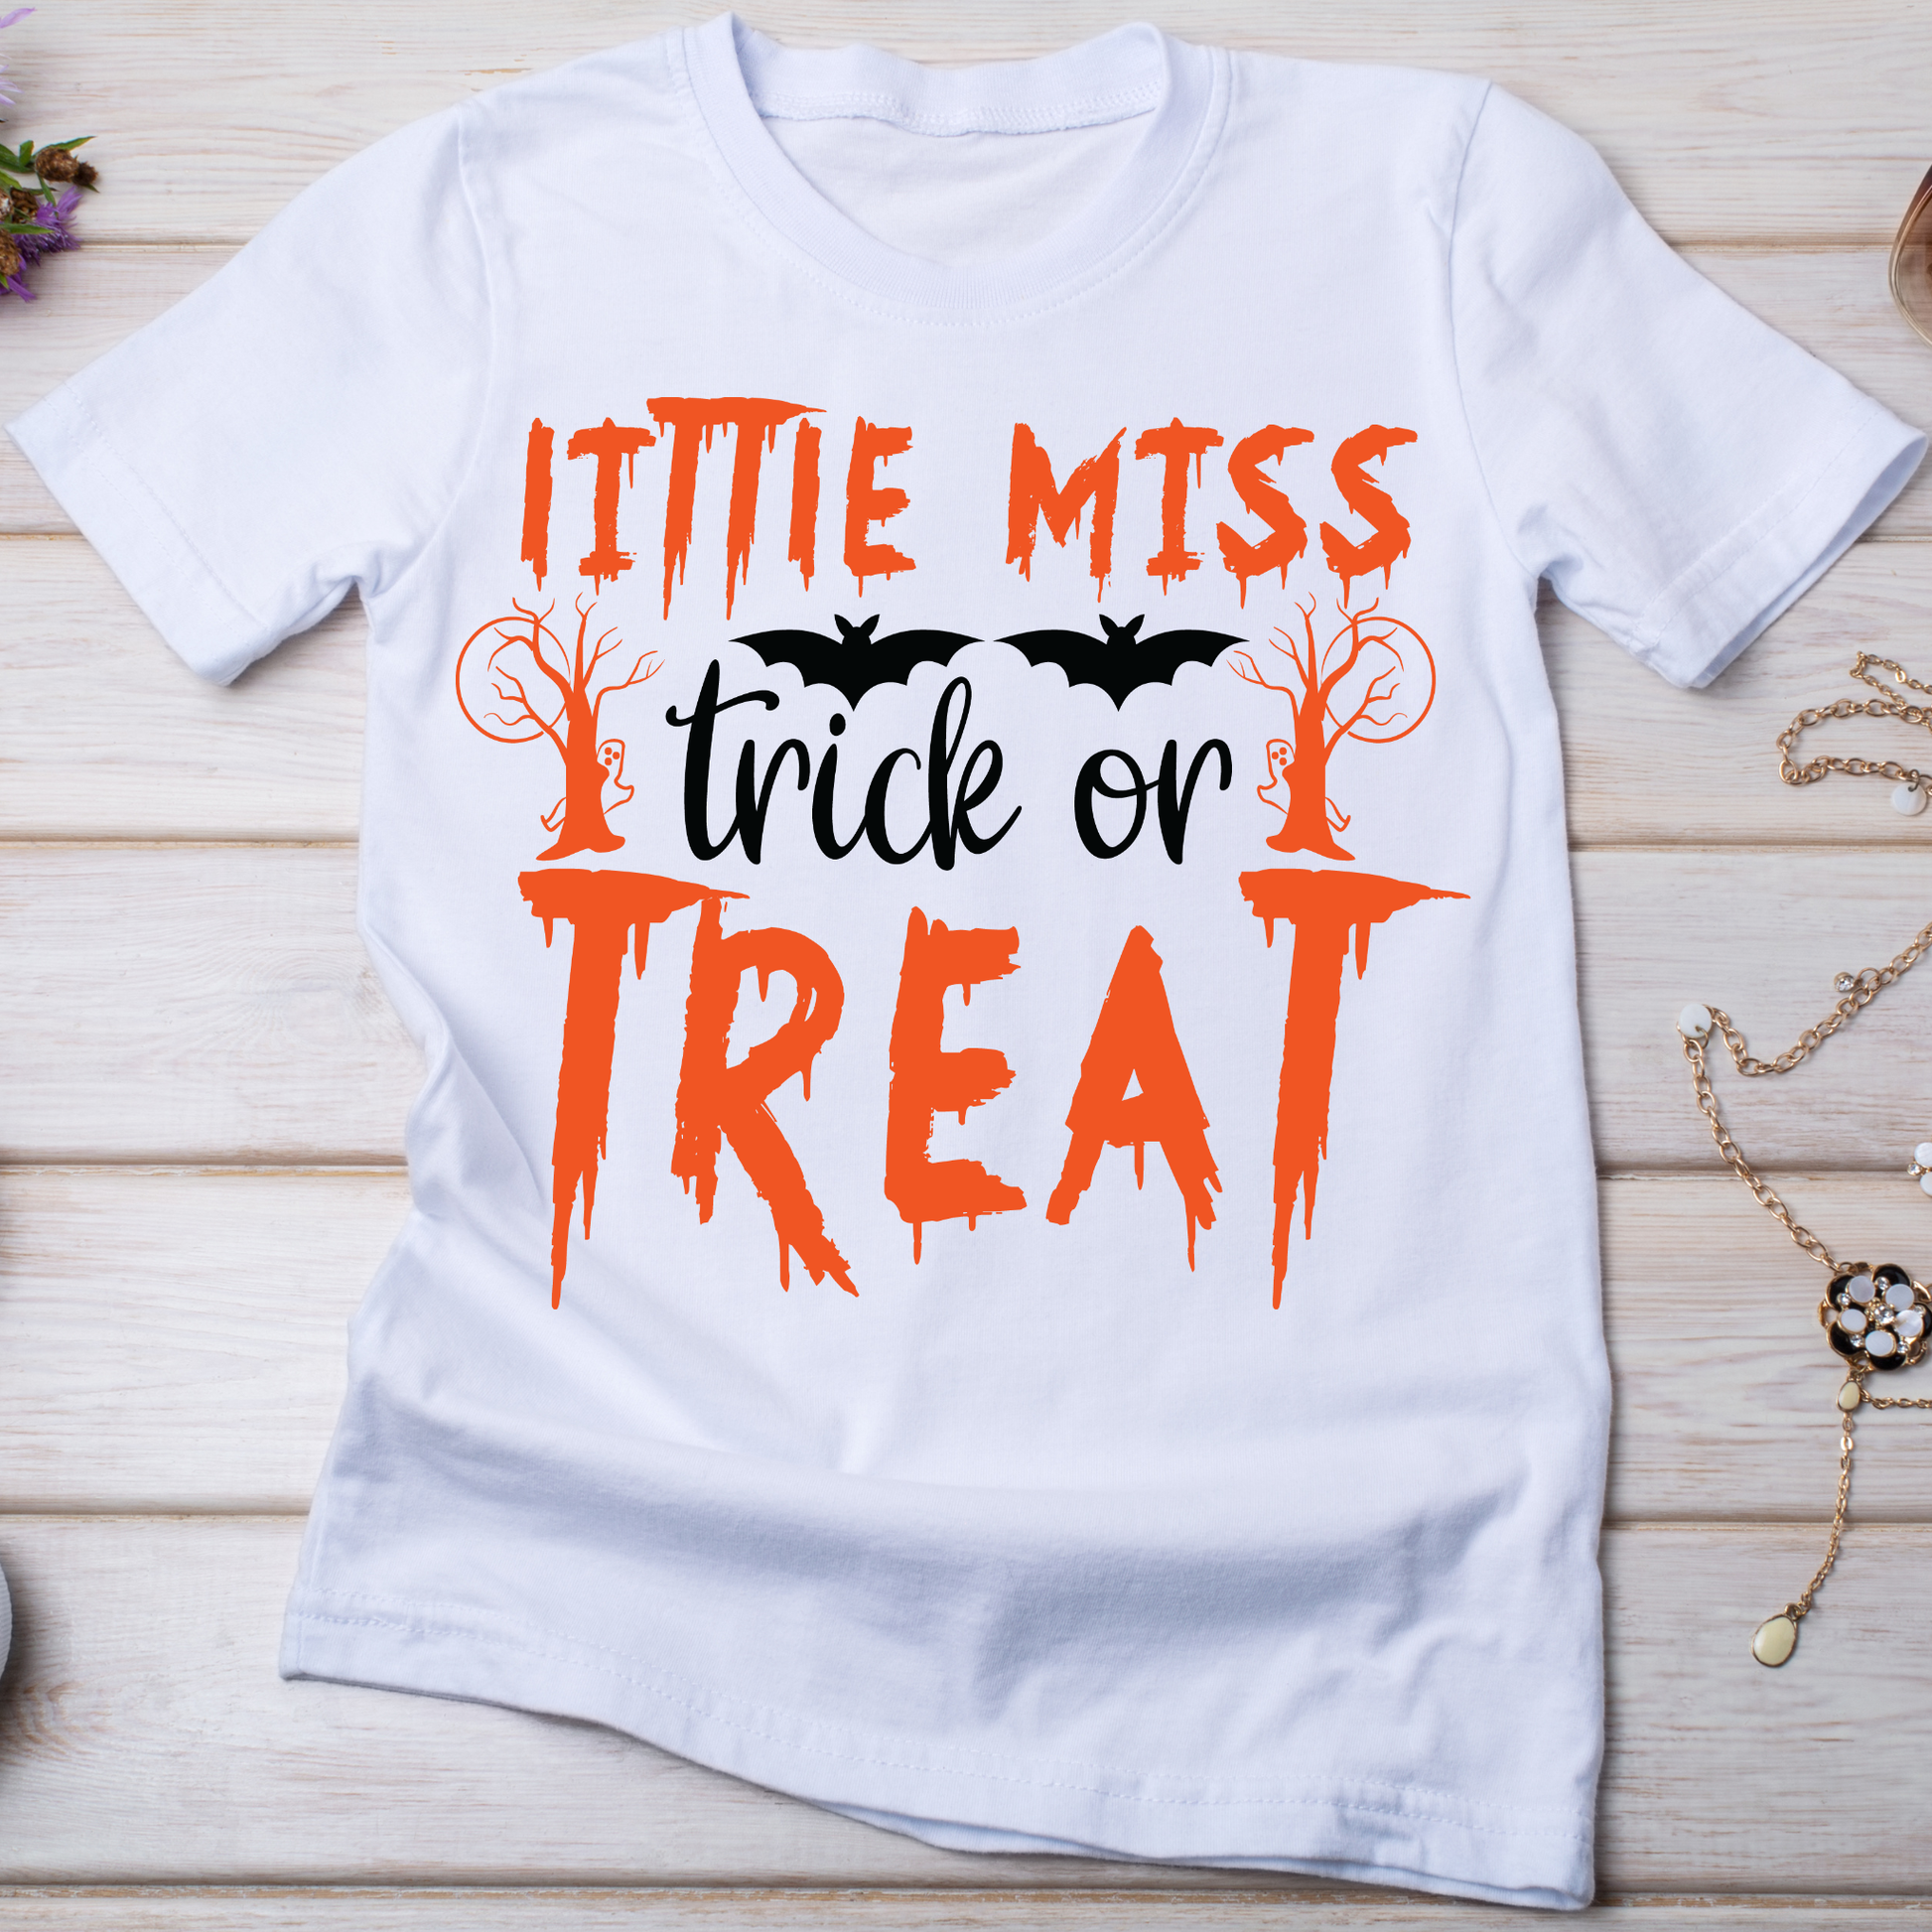 Ittie miss trick or treat Women's Halloween t-shirt - Premium t-shirt from Lees Krazy Teez - Just $19.95! Shop now at Lees Krazy Teez